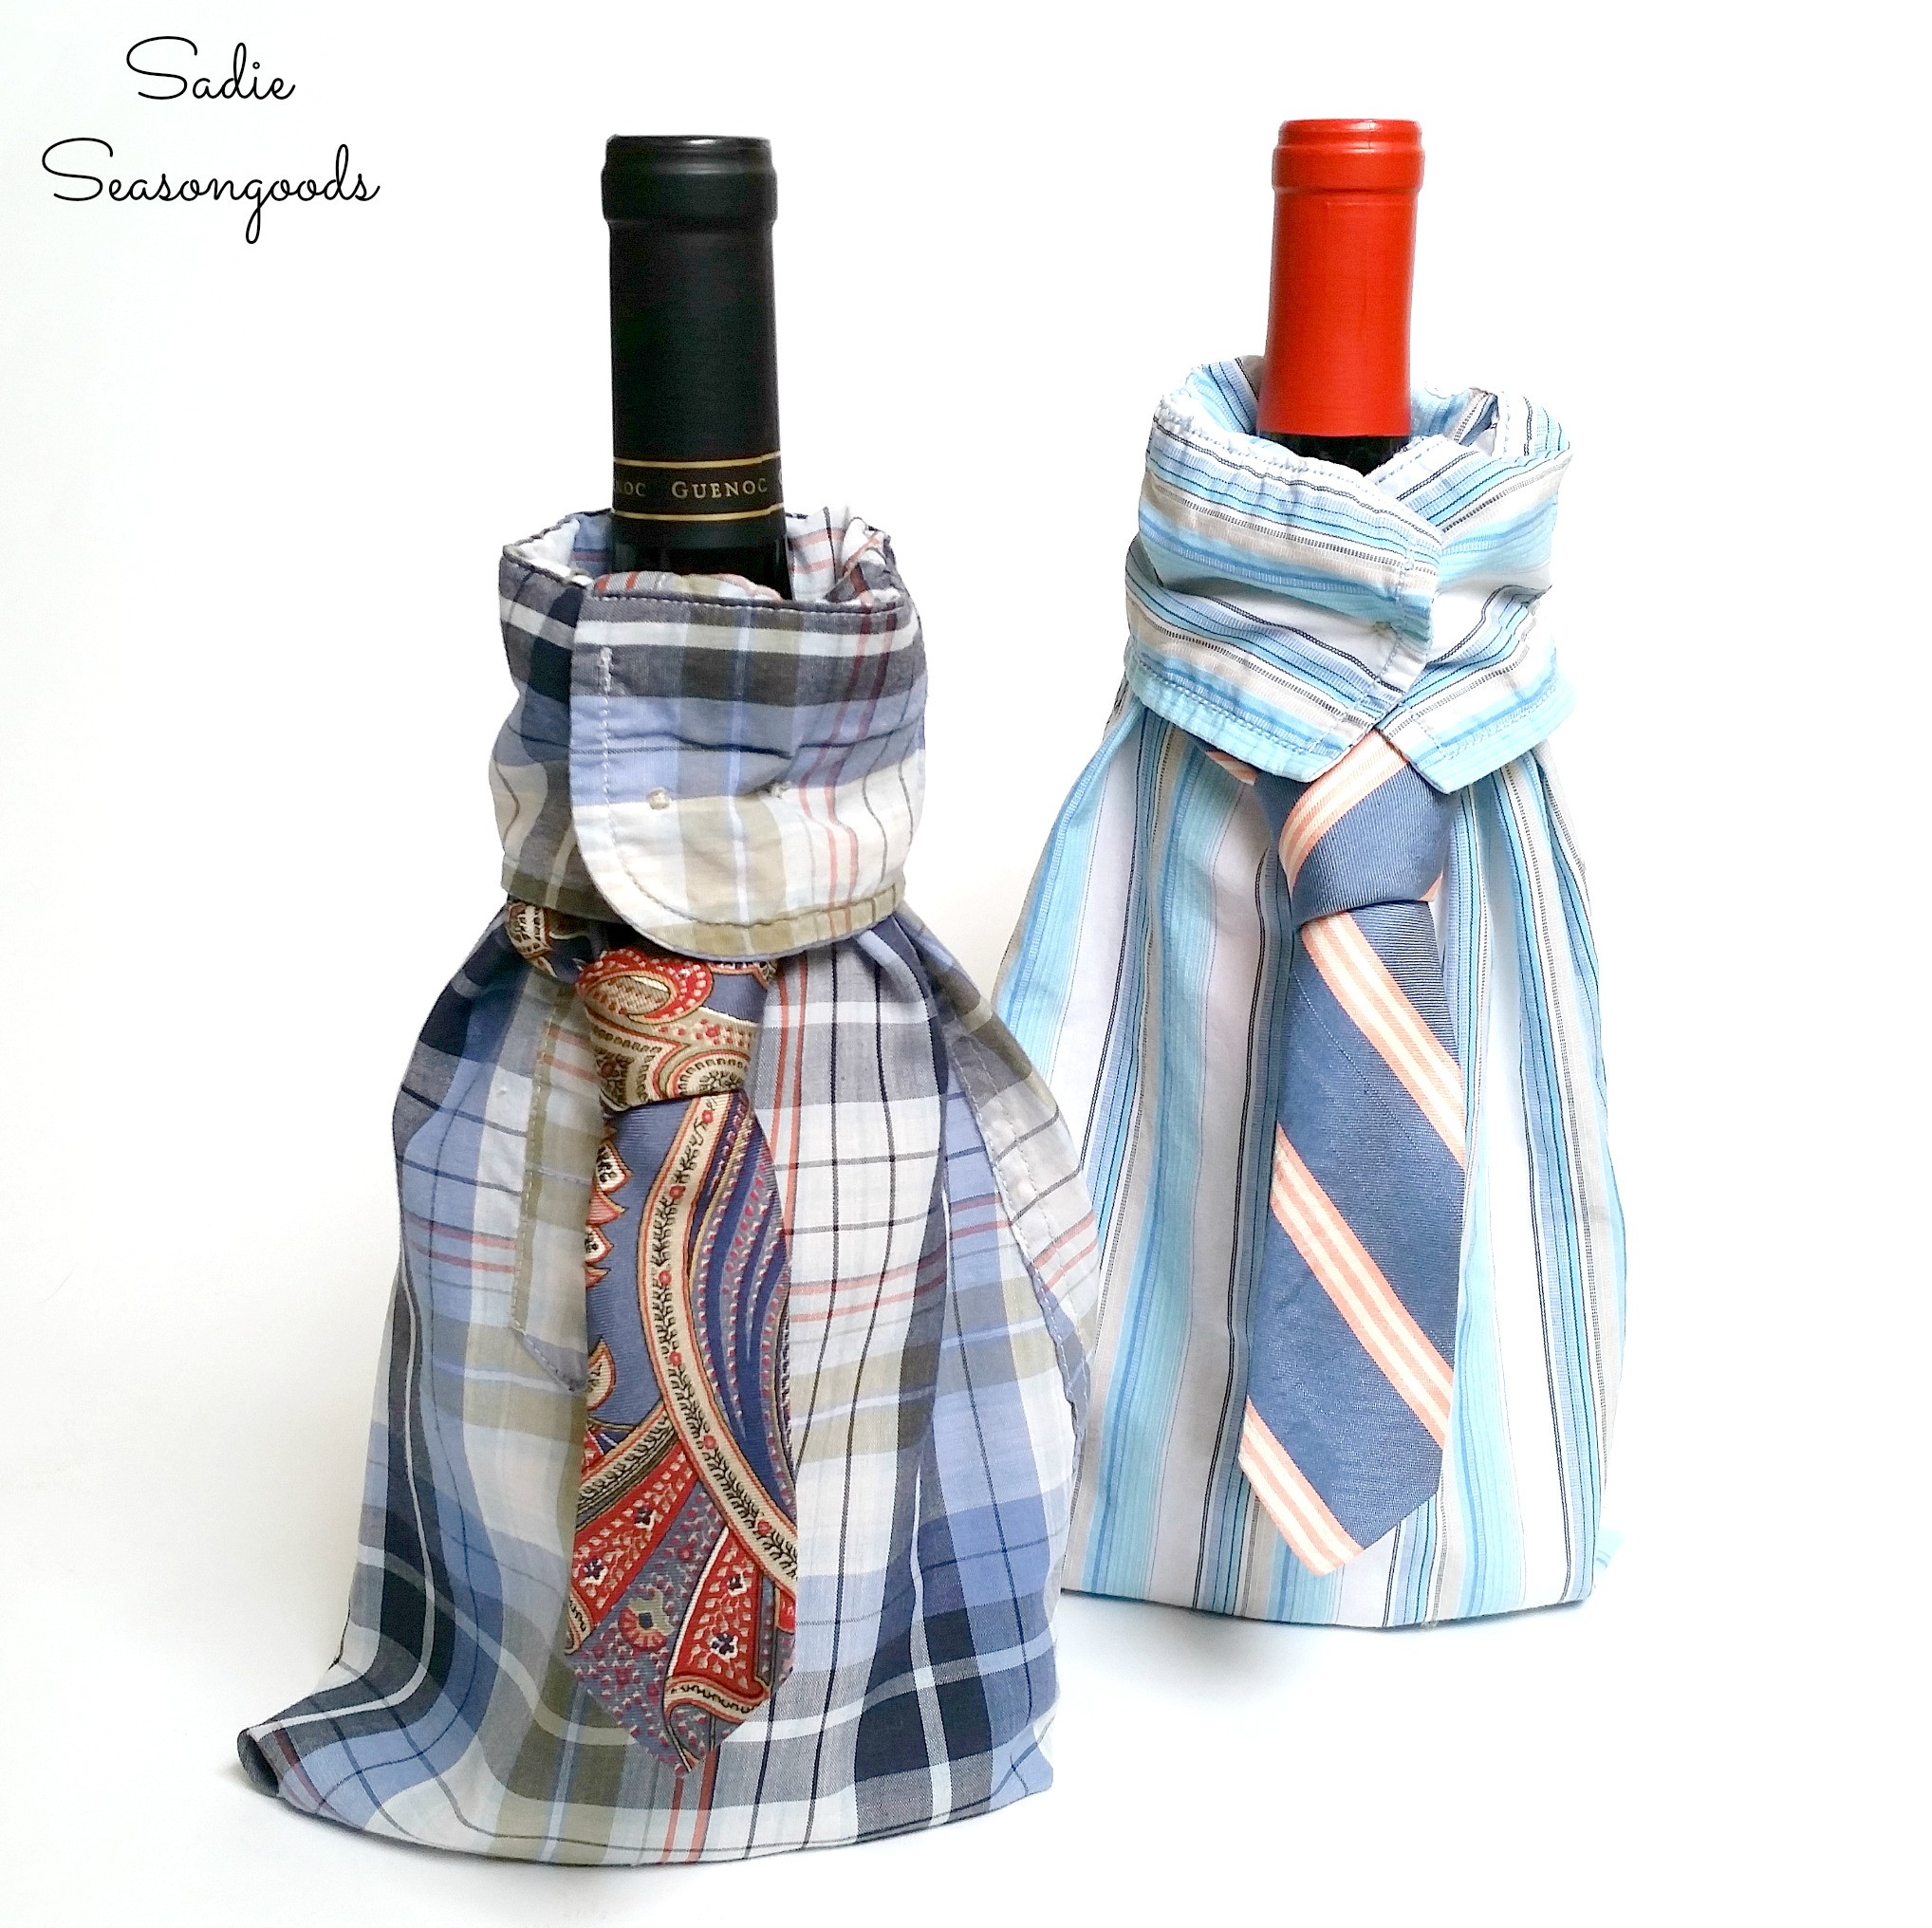 Best ideas about Men'S Gift Ideas
. Save or Pin 56 Liquor Tie Men 039 s Shirt And Tie DIY Wine Liquor Now.